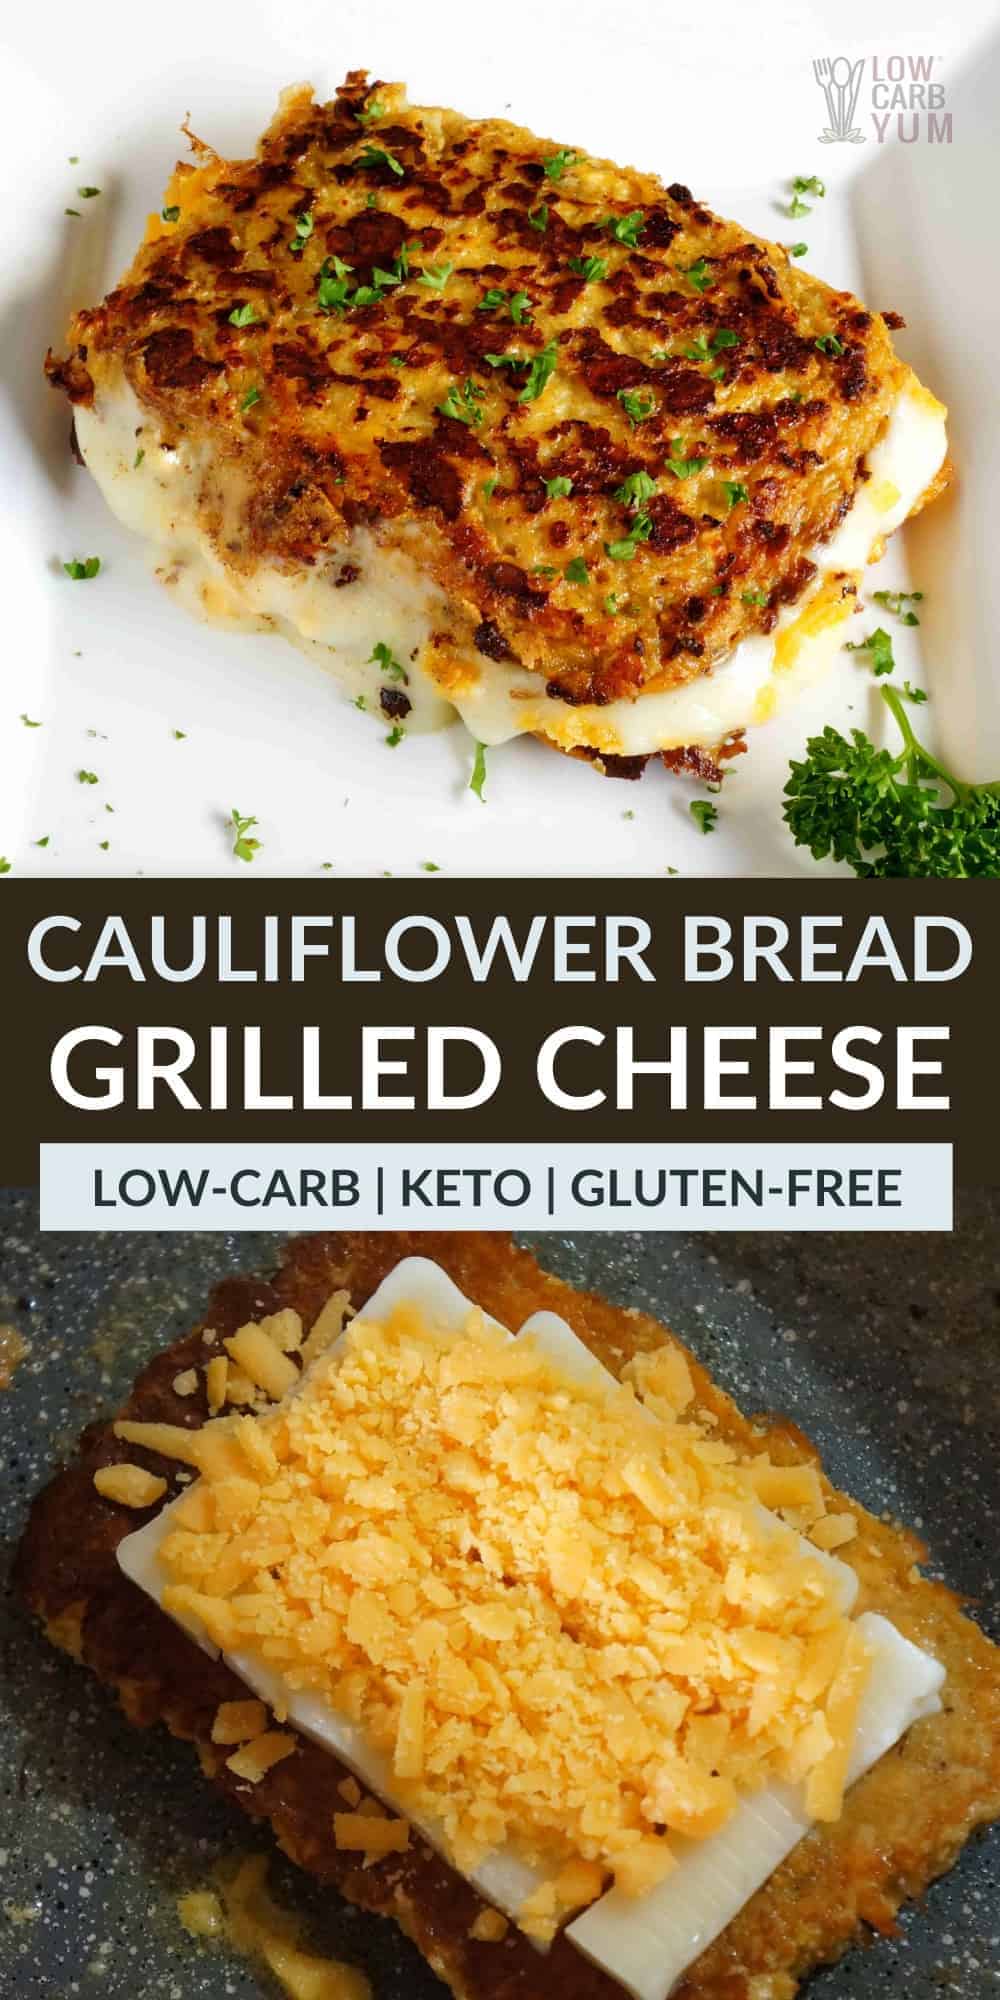 keto cauliflower grilled cheese pinterest image